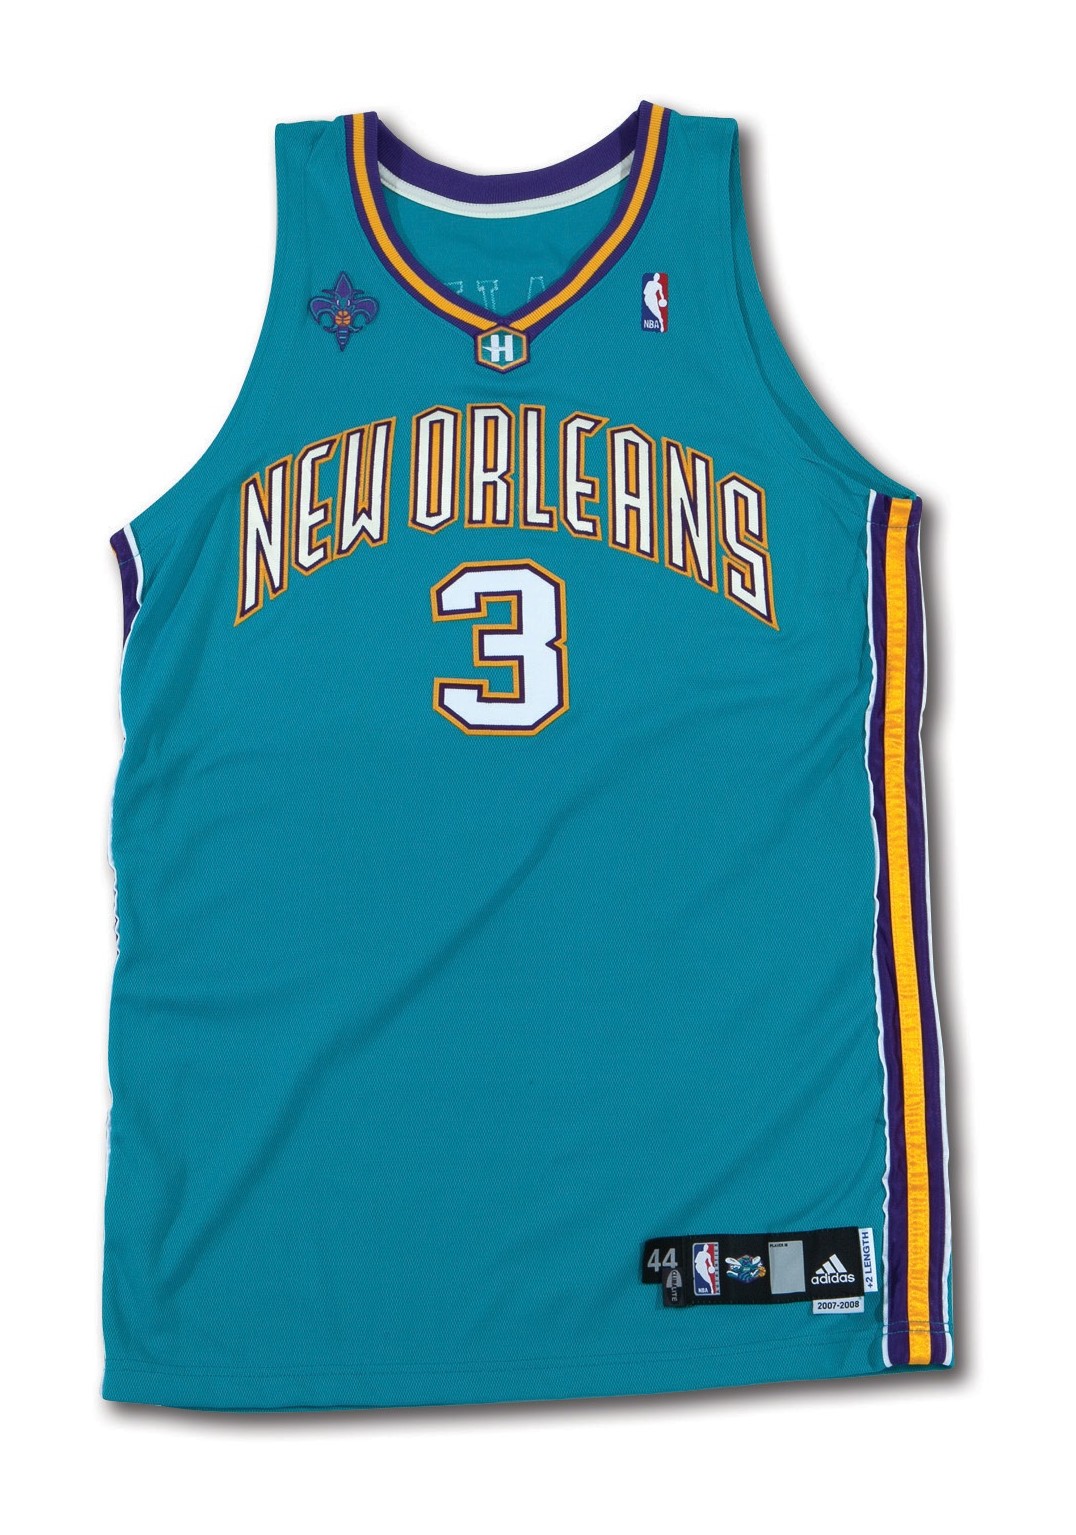 New Orleans Hornets 2007-2008 Away Jersey